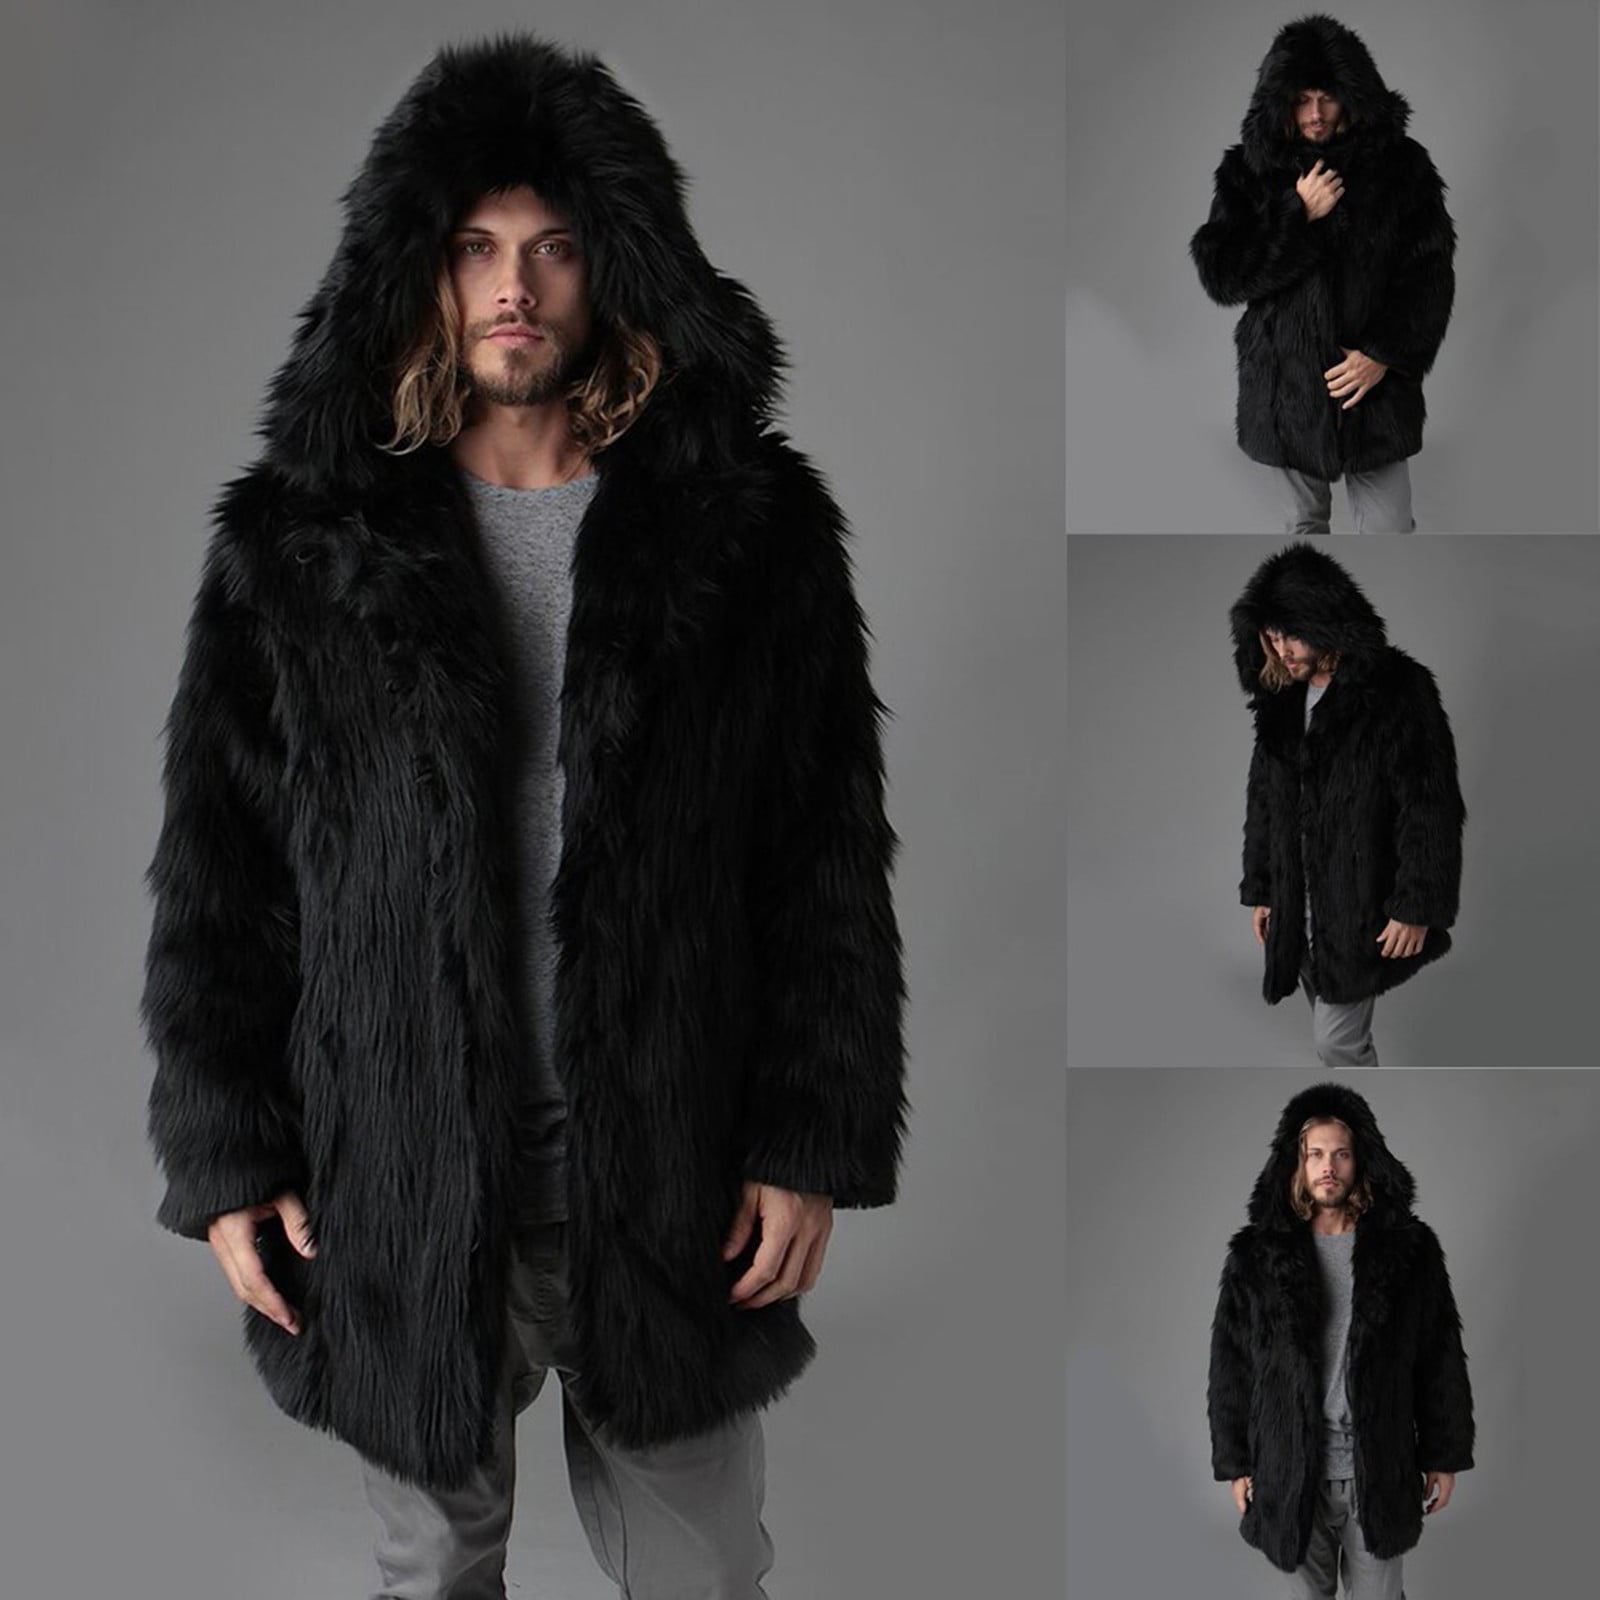 Love essentials Fashion coat Winter Coats Men Thick Warm Jacket Male Overcoat Removable Hood Cotton-Padded Windbreak Outwear 